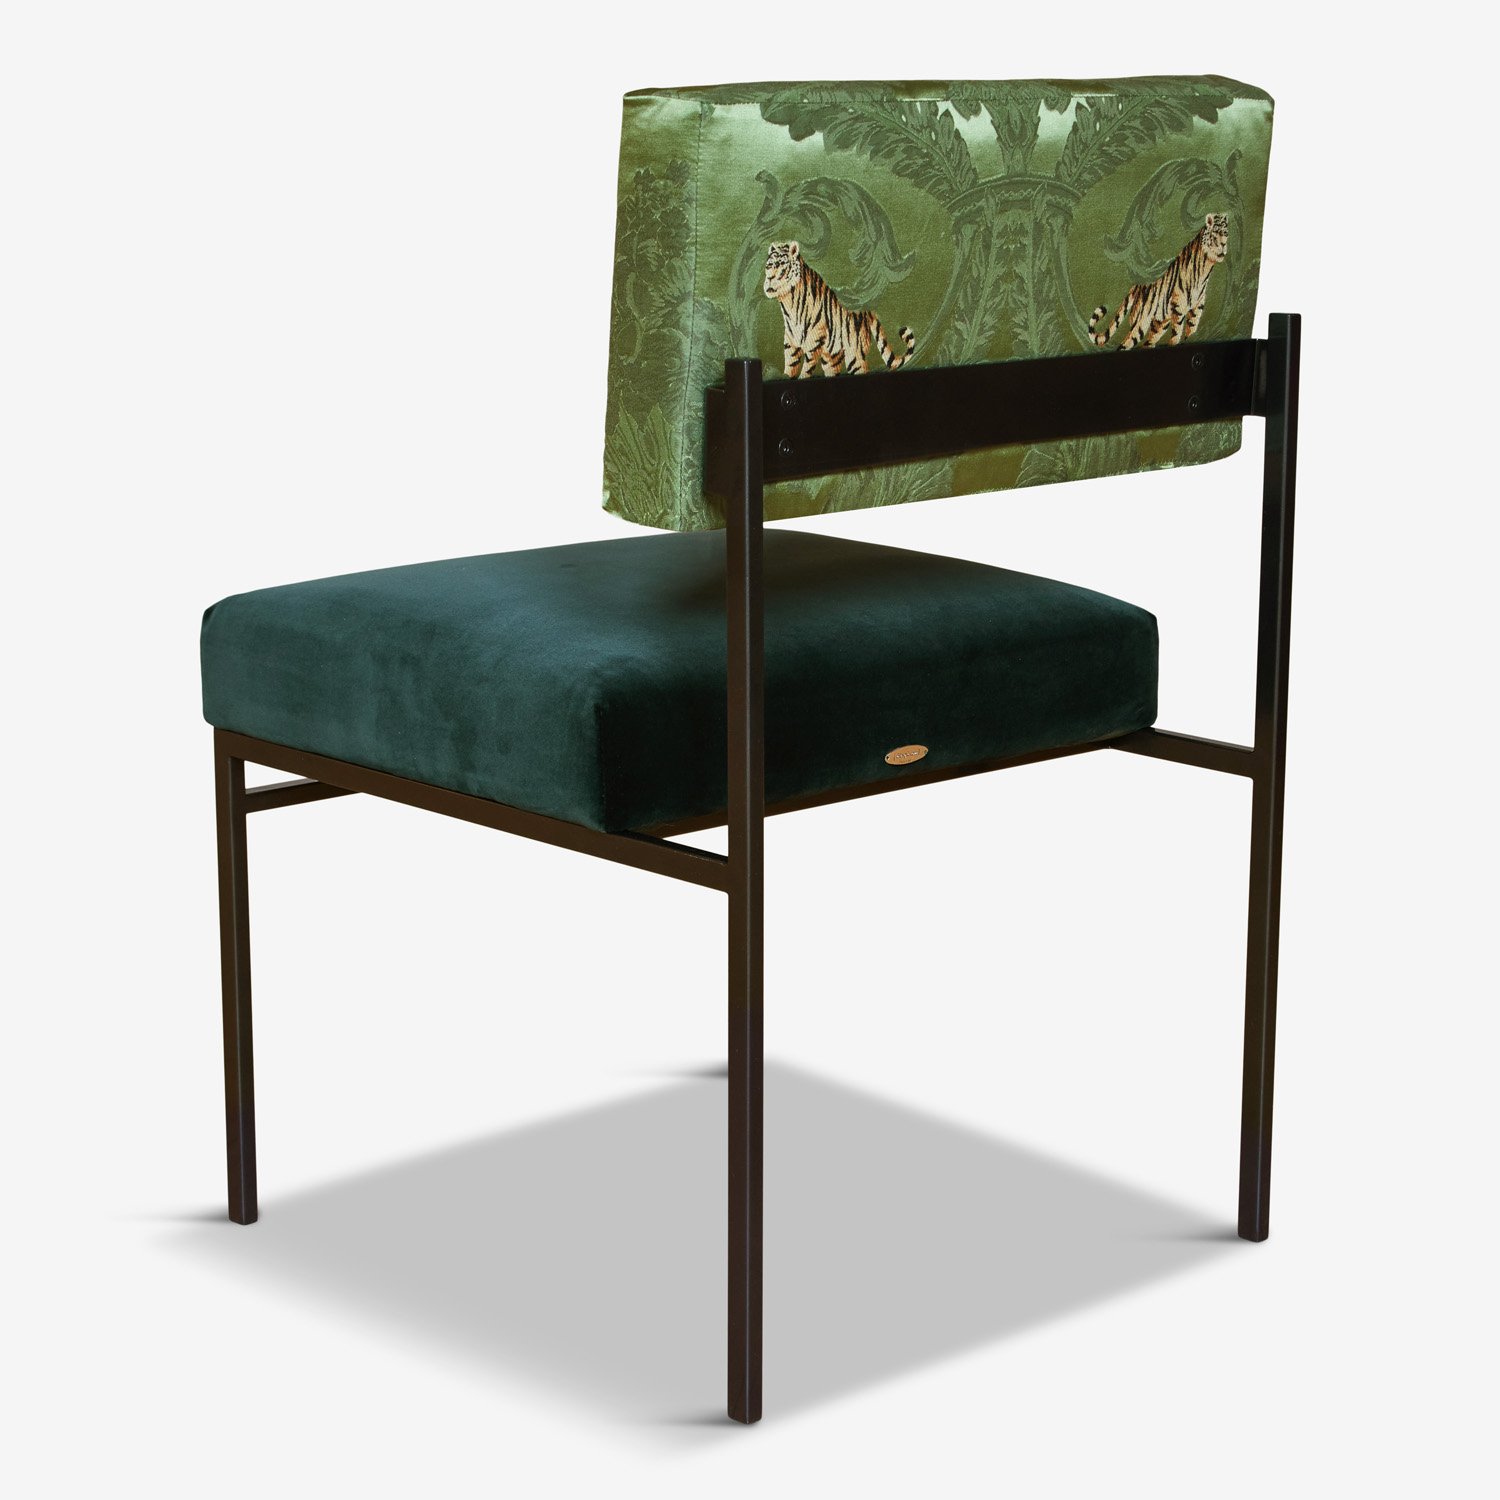 Copy of Biosofa Aurea sustainable dining chair IMG_0803_a.jpg